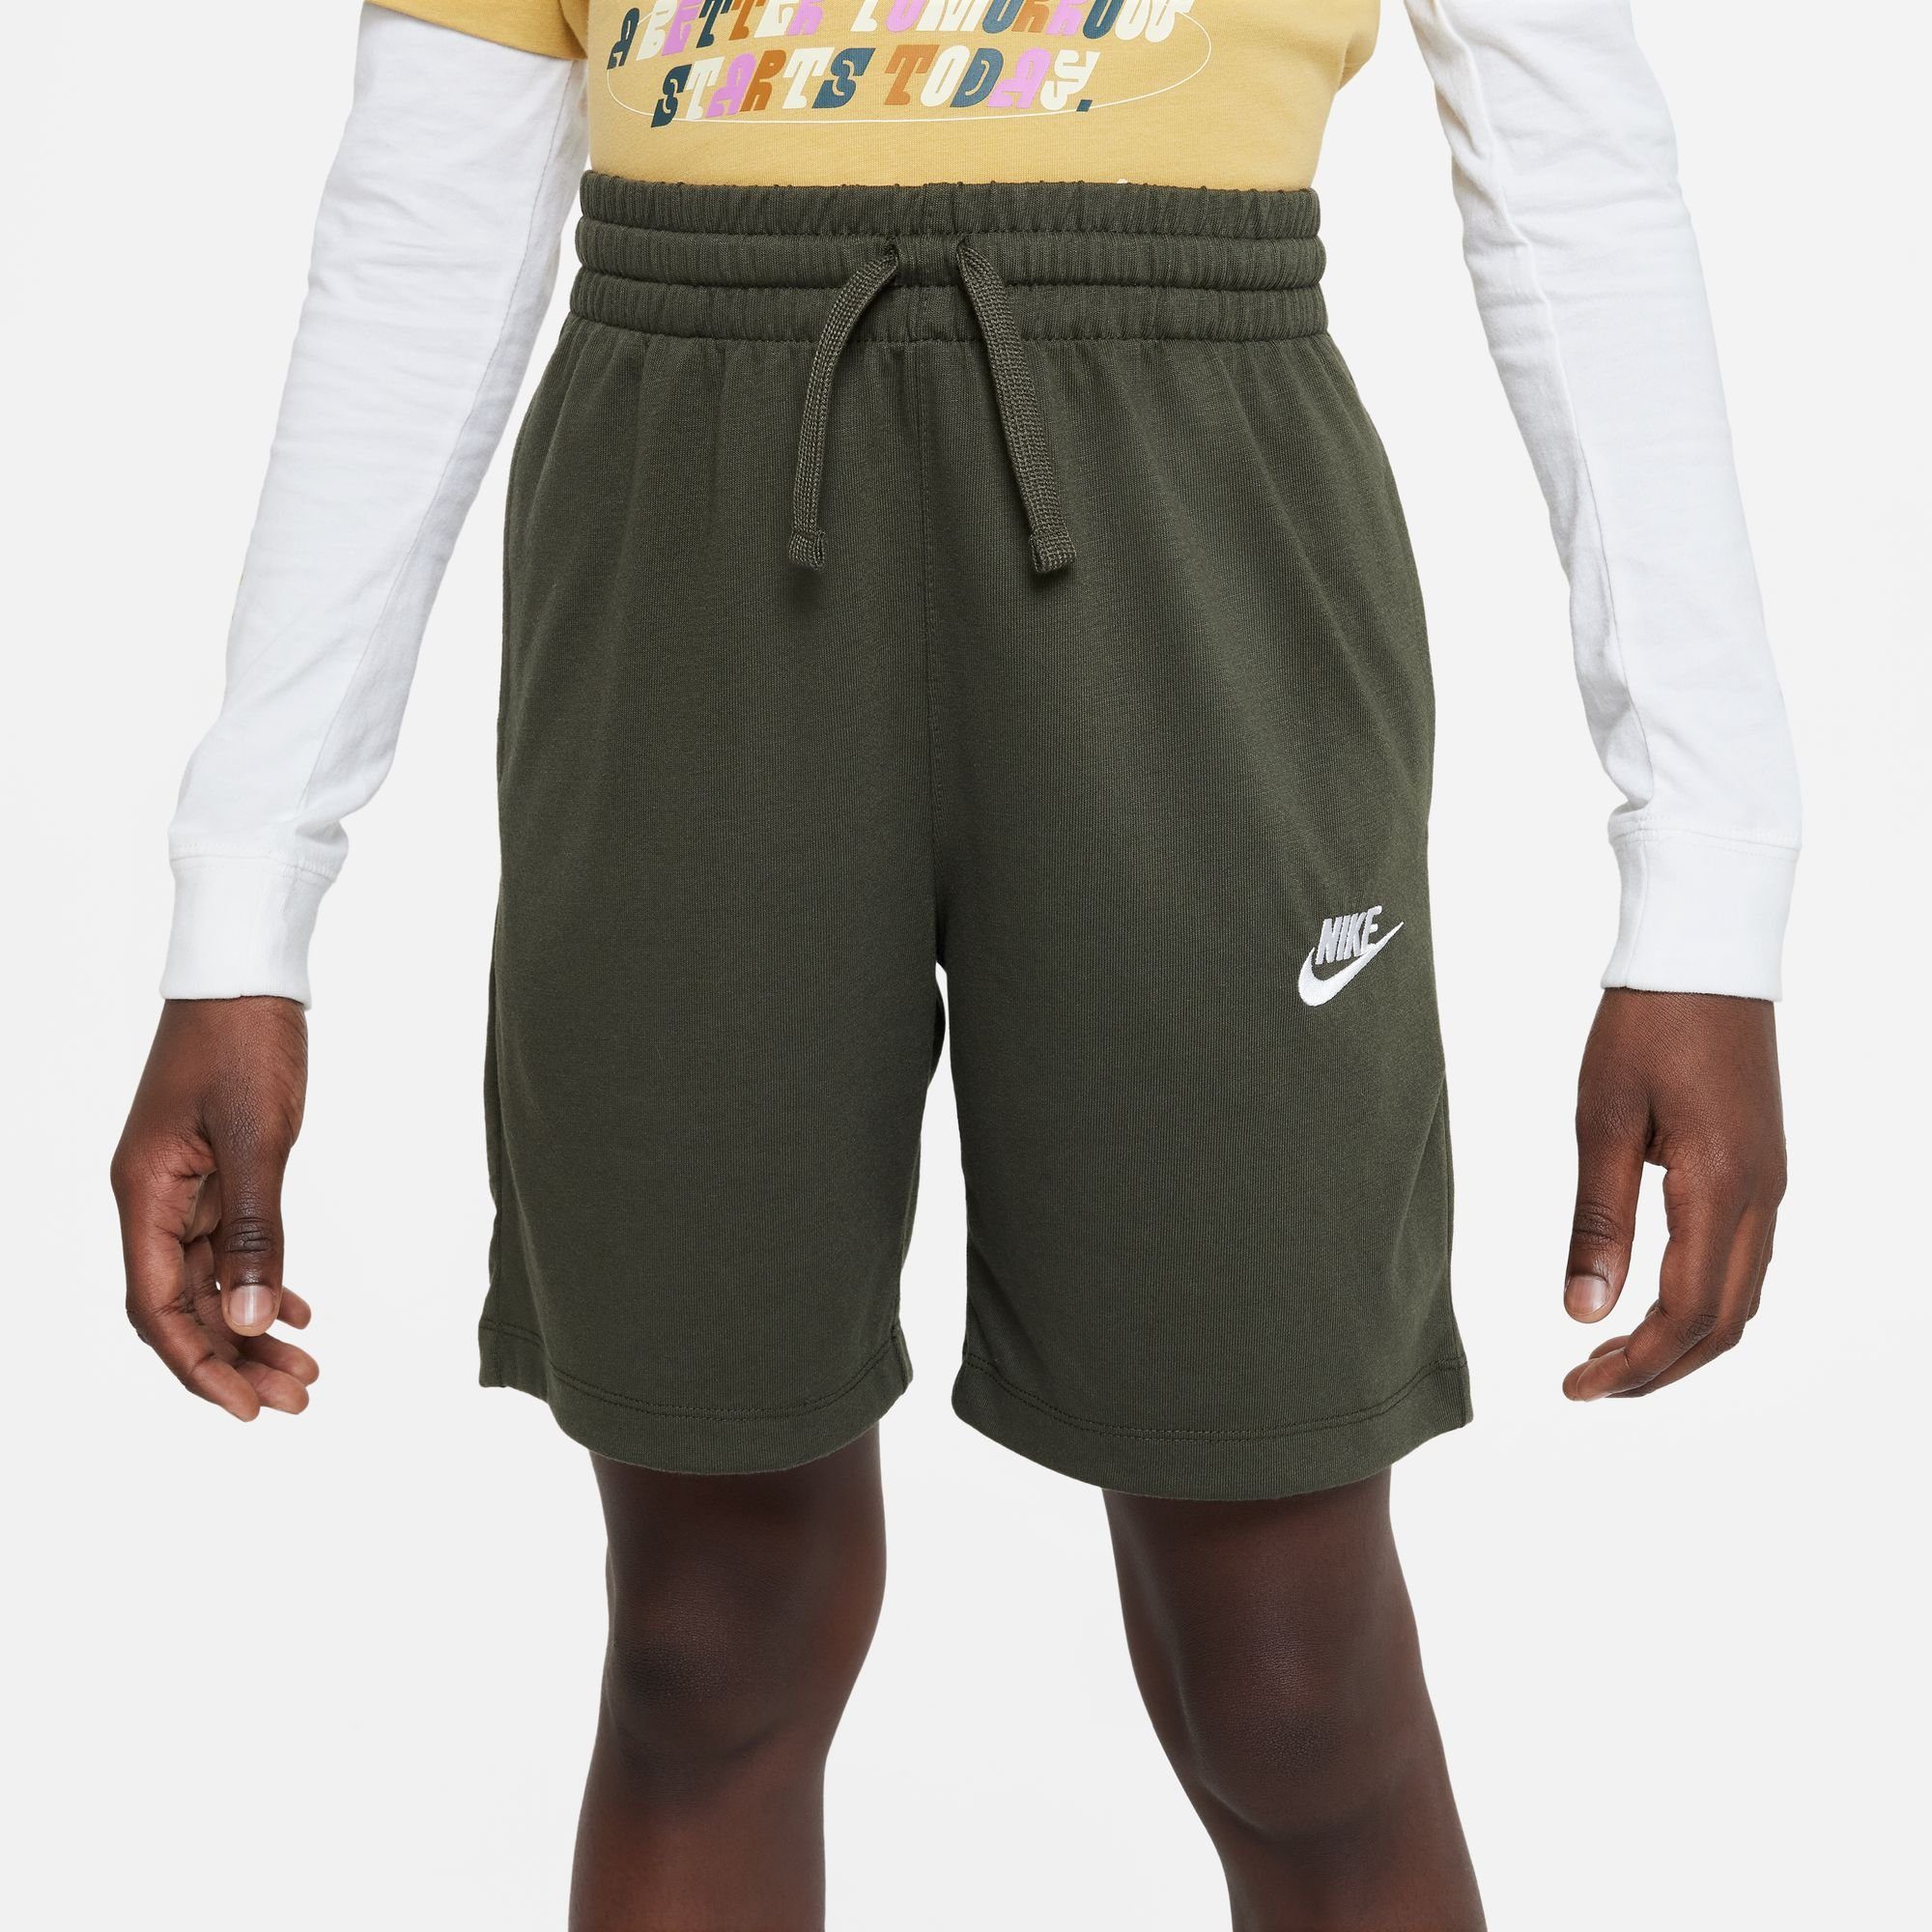 CARGO KIDS' SHORTS BIG JERSEY Sportswear (BOYS) KHAKI/WHITE Nike Shorts